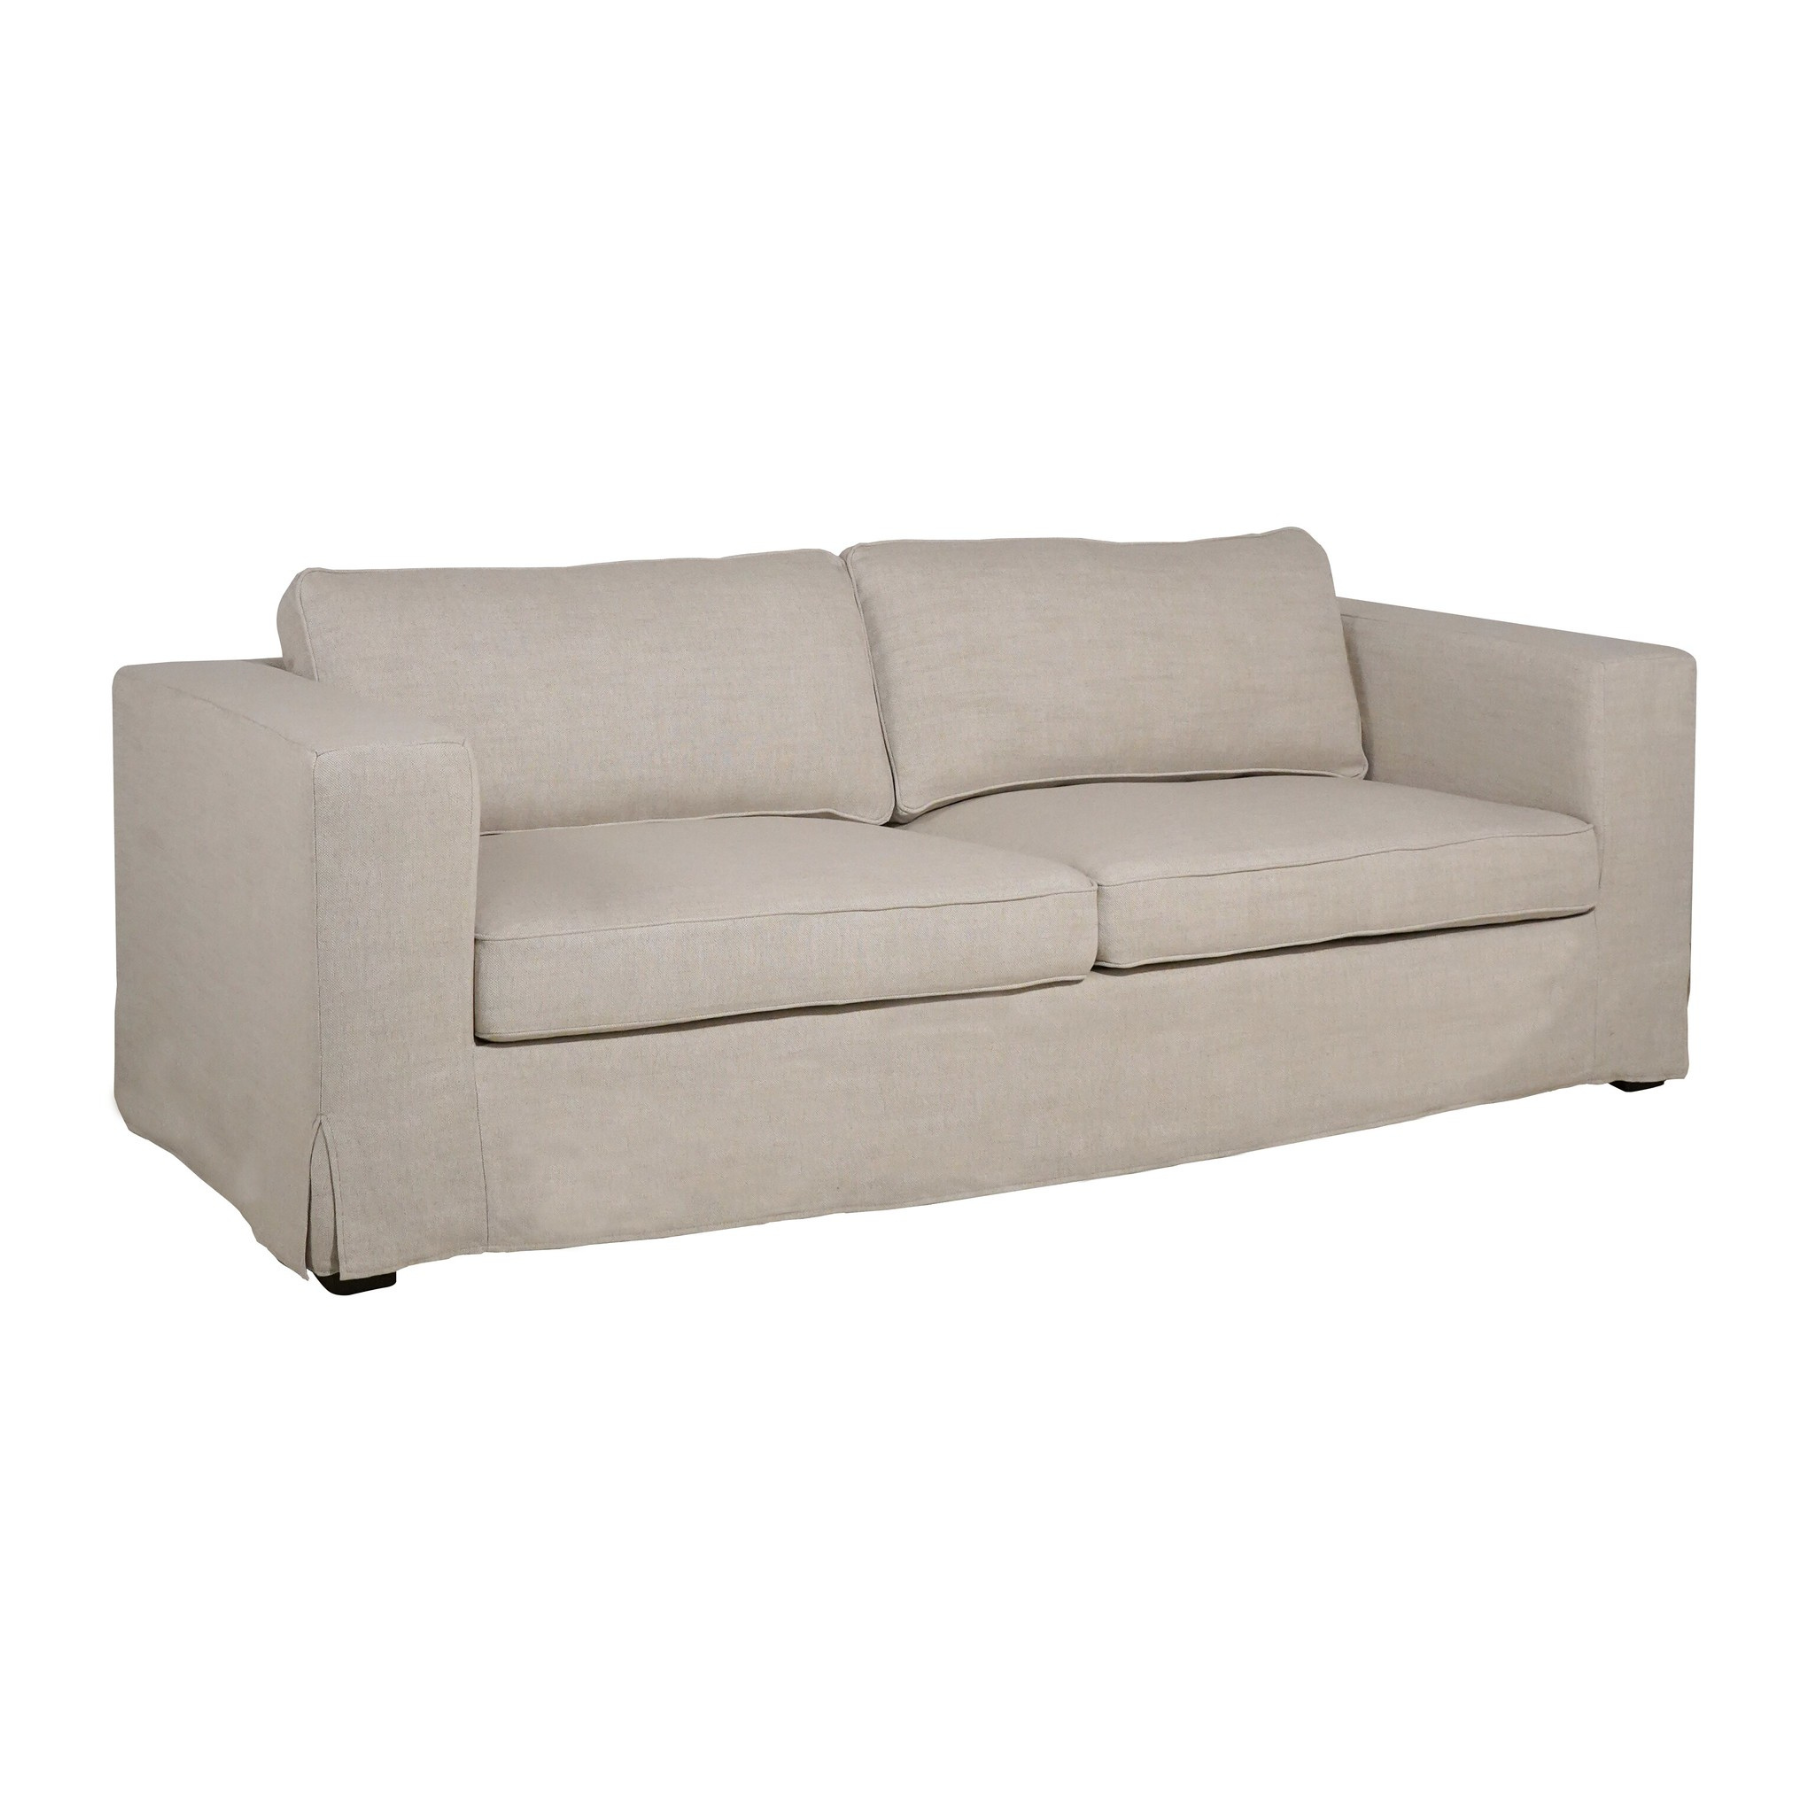 – Slipcover Stores Natural Linen Hauser Sofa Company Denver